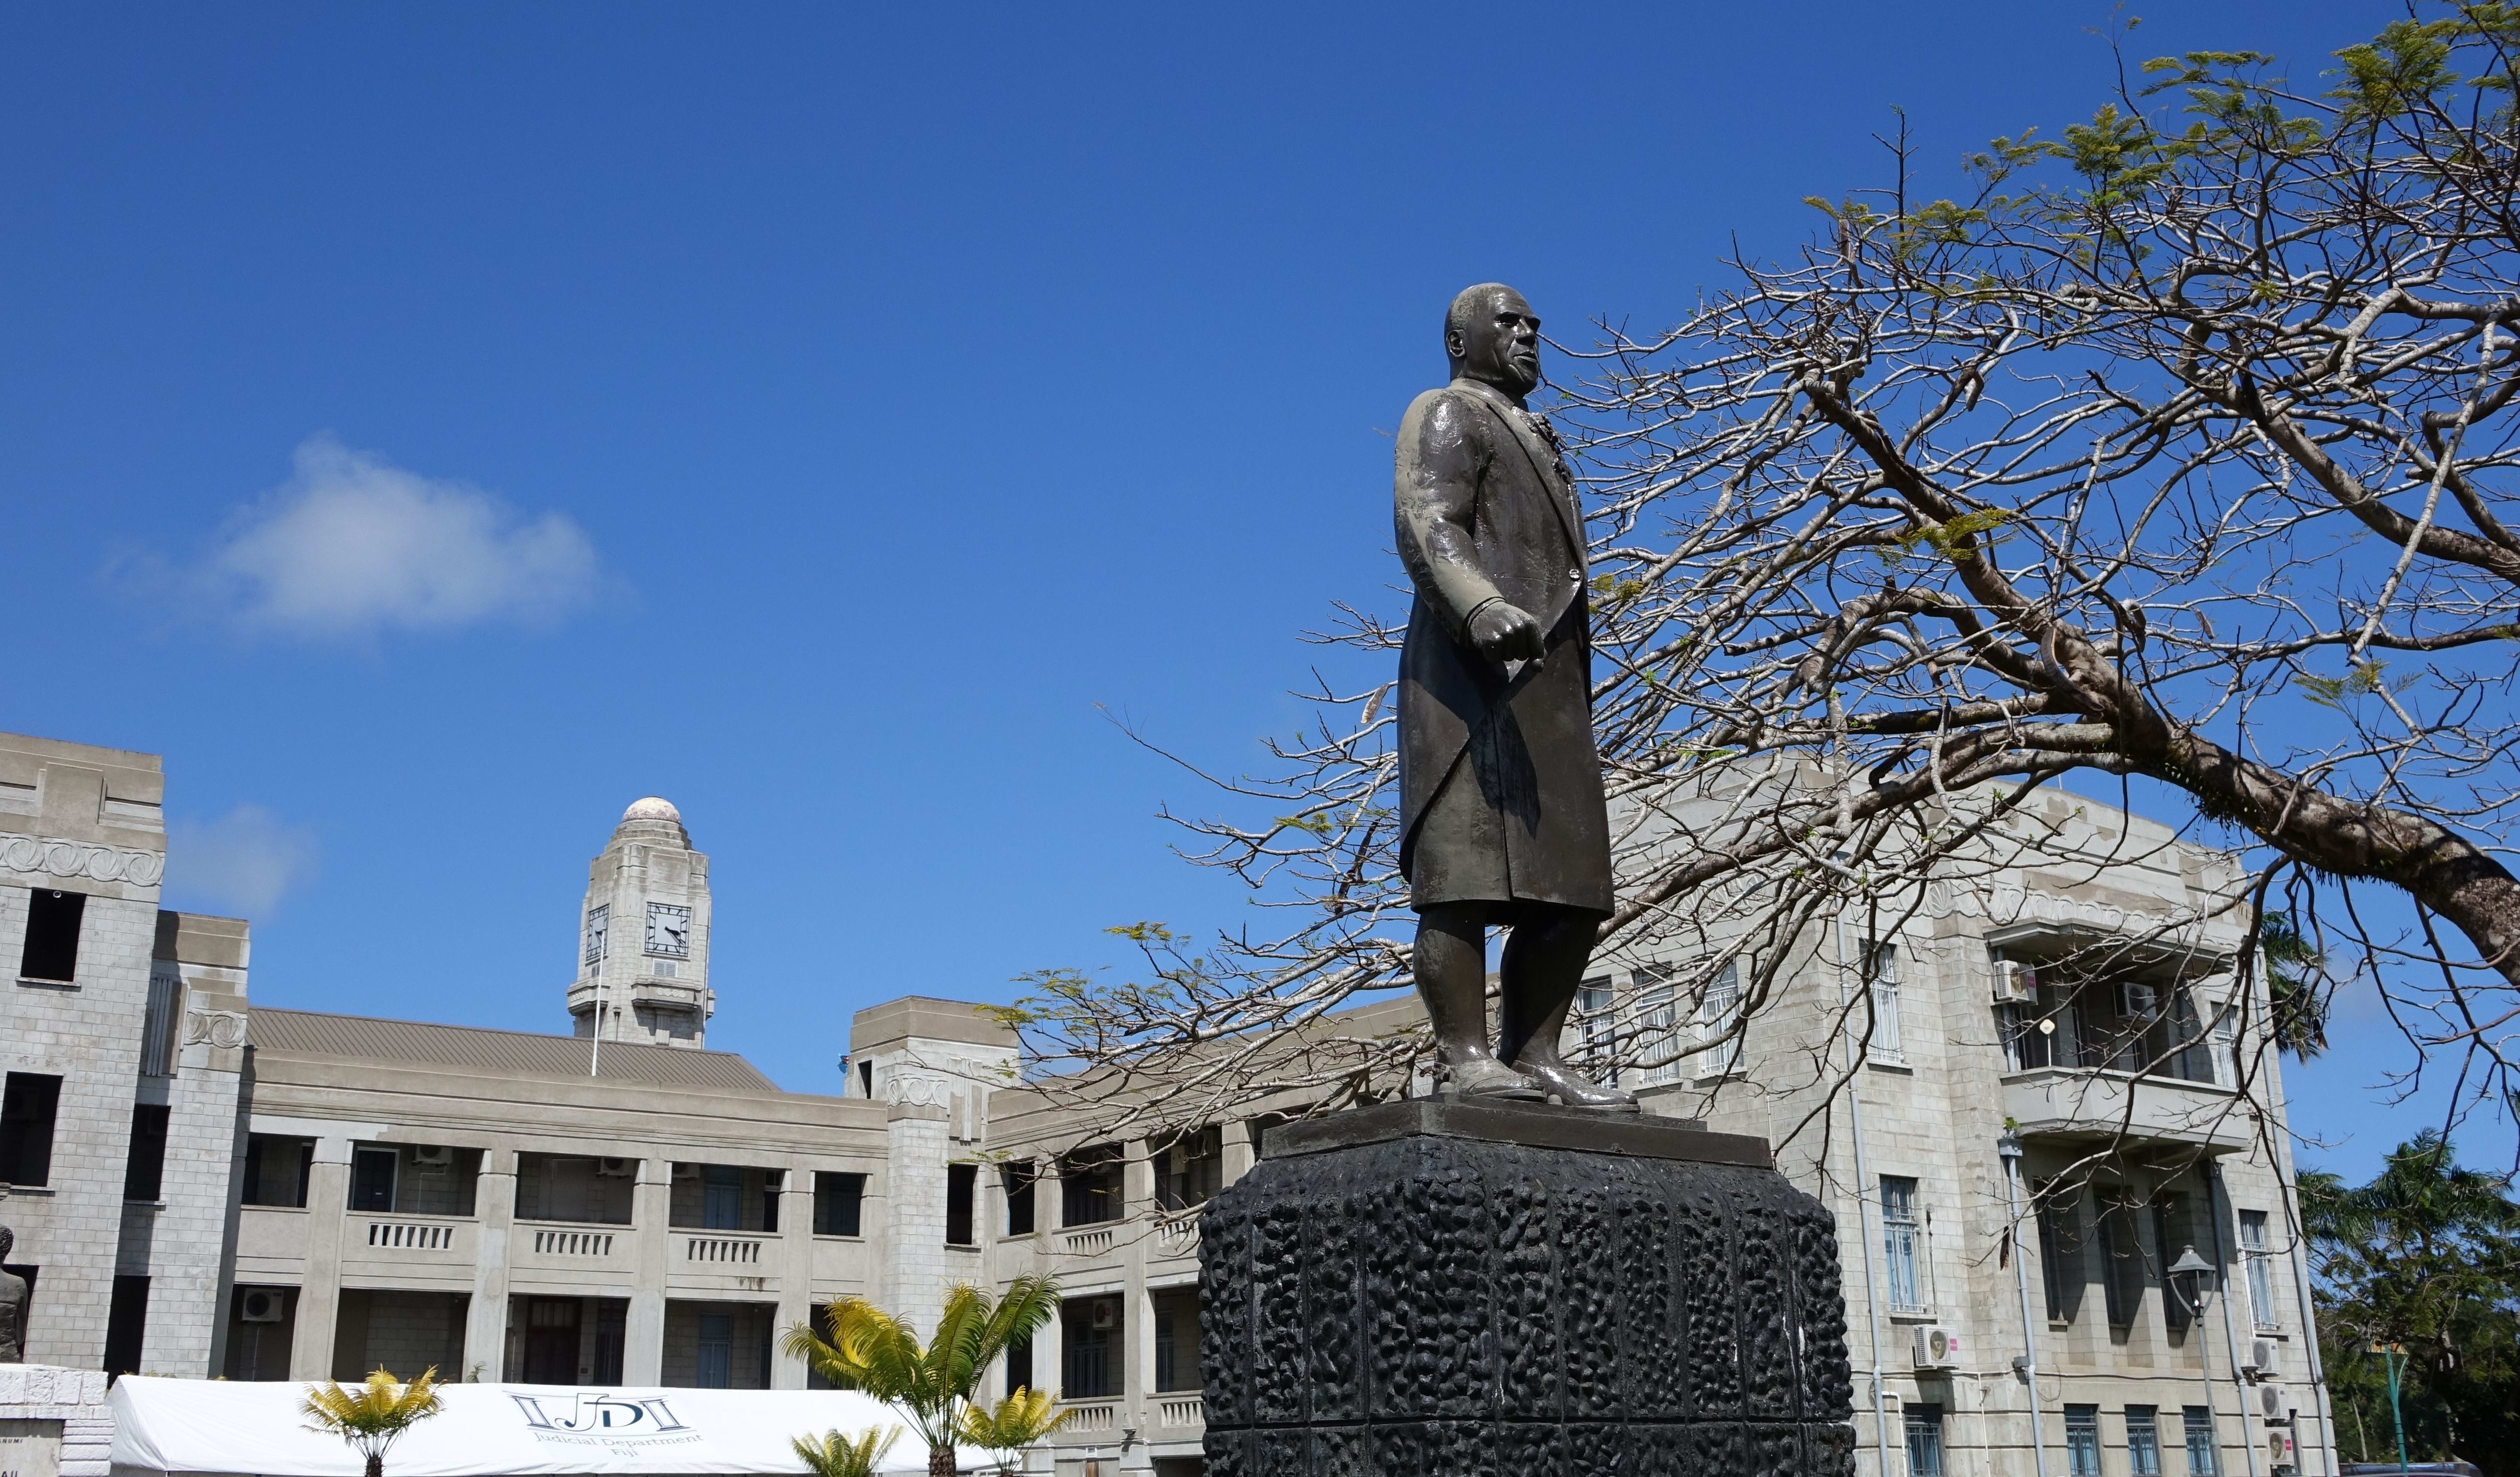 A statue of the Fiji statesman Ratu Sir Lala Sukuna stands guard outside Fiji's government buildings, Suva